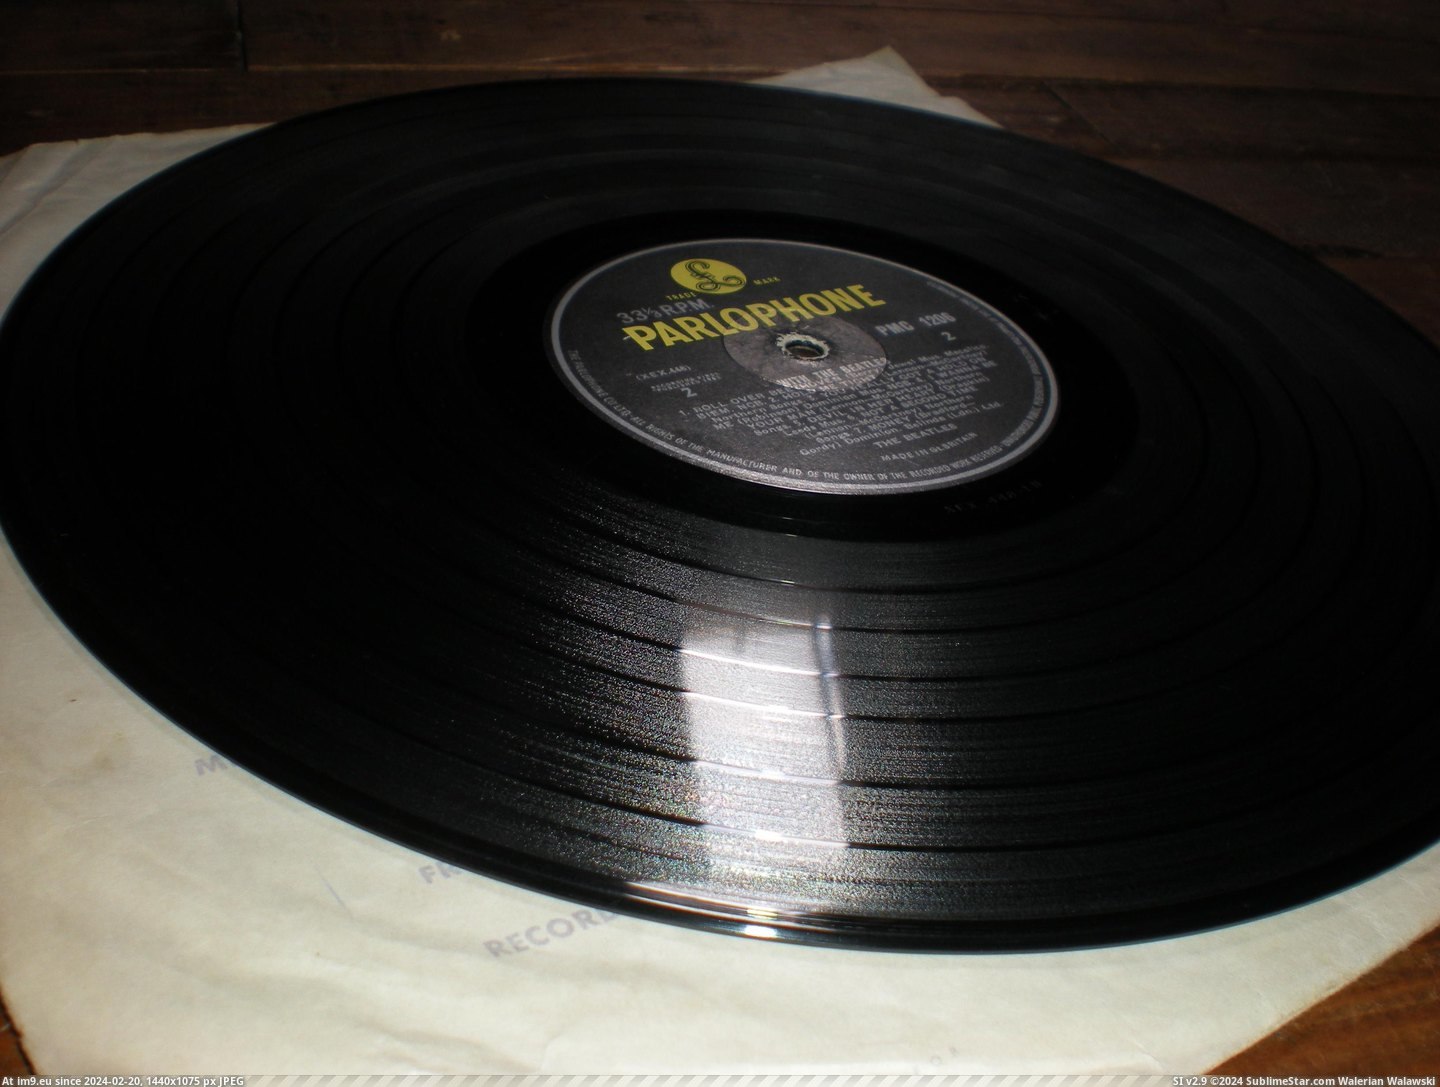 #Records #Vinyl #Record With The 1n 5 Pic. (Obraz z album new 1))